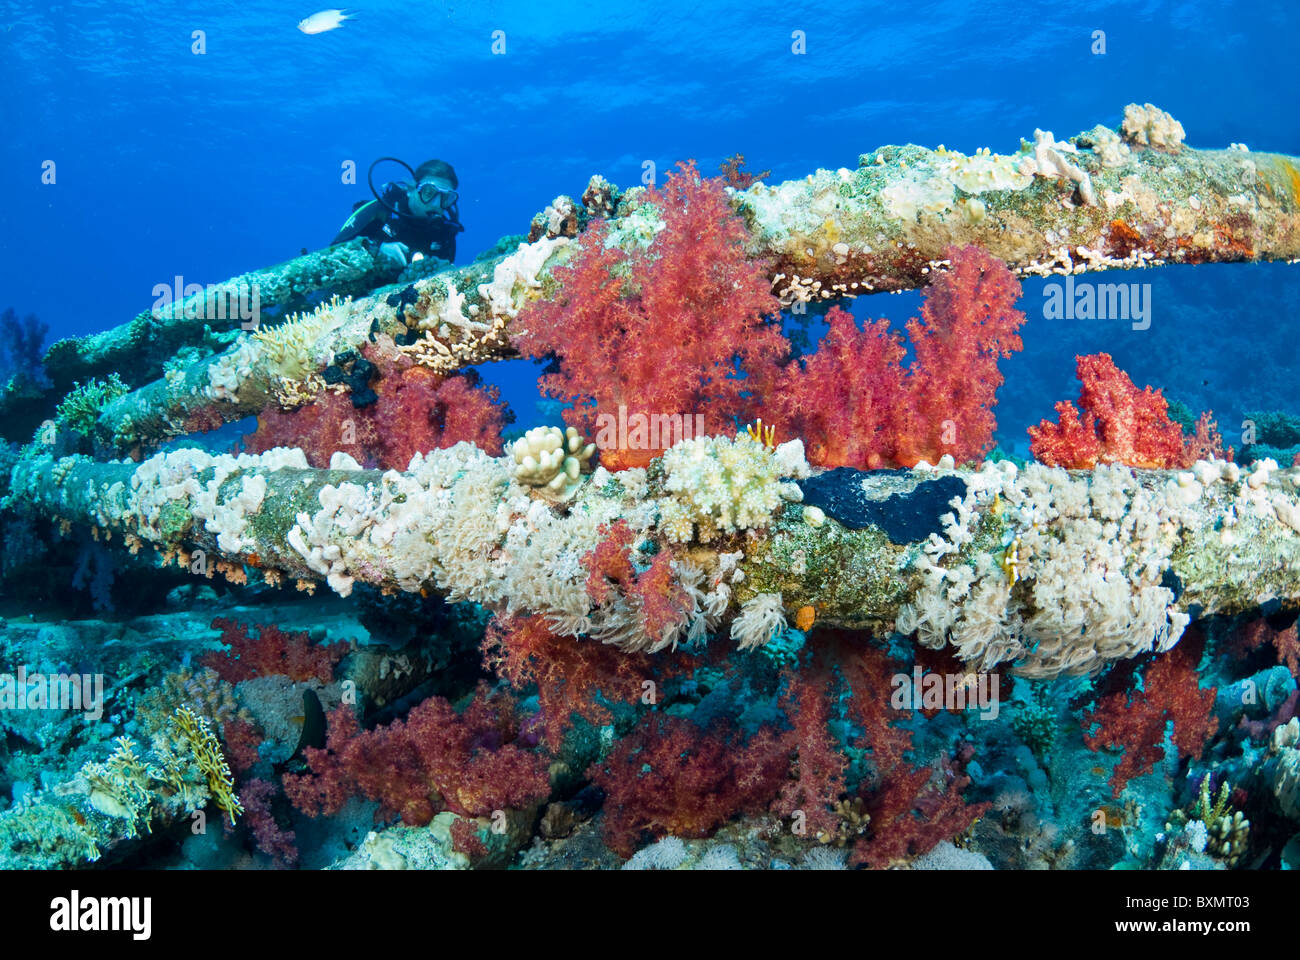 Wreck of Yolanda, Shark Yolanda reef, Ras Mohammed national park, Sinai, Egypt, Red Sea Stock Photo